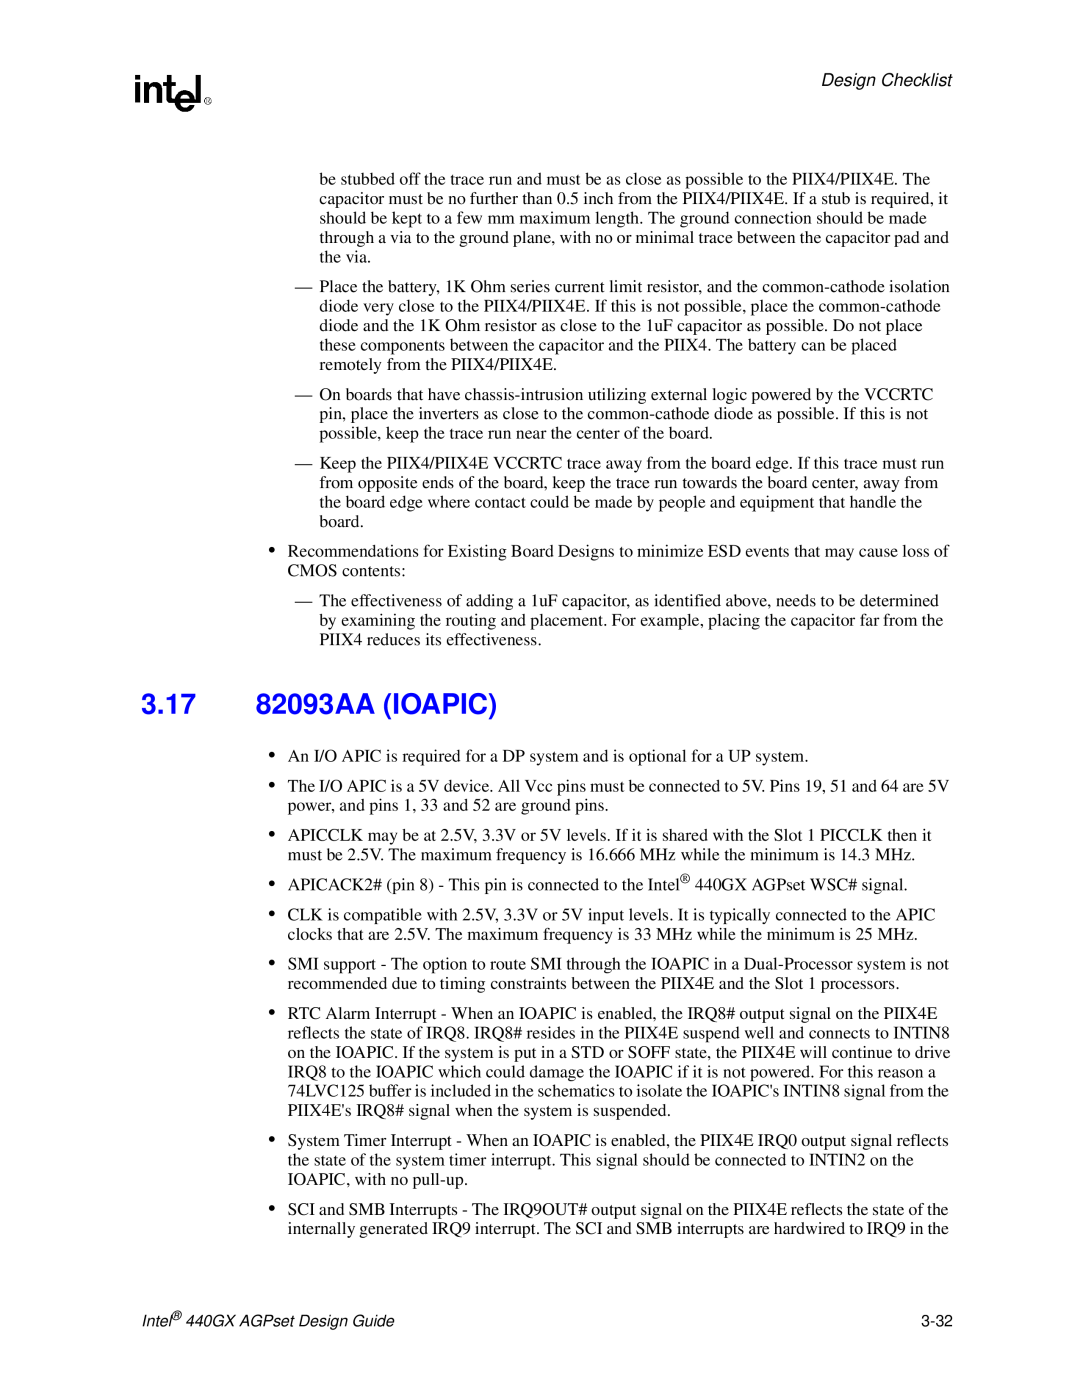 Intel 440GX manual 3.17 82093AA IOAPIC, Design Checklist 